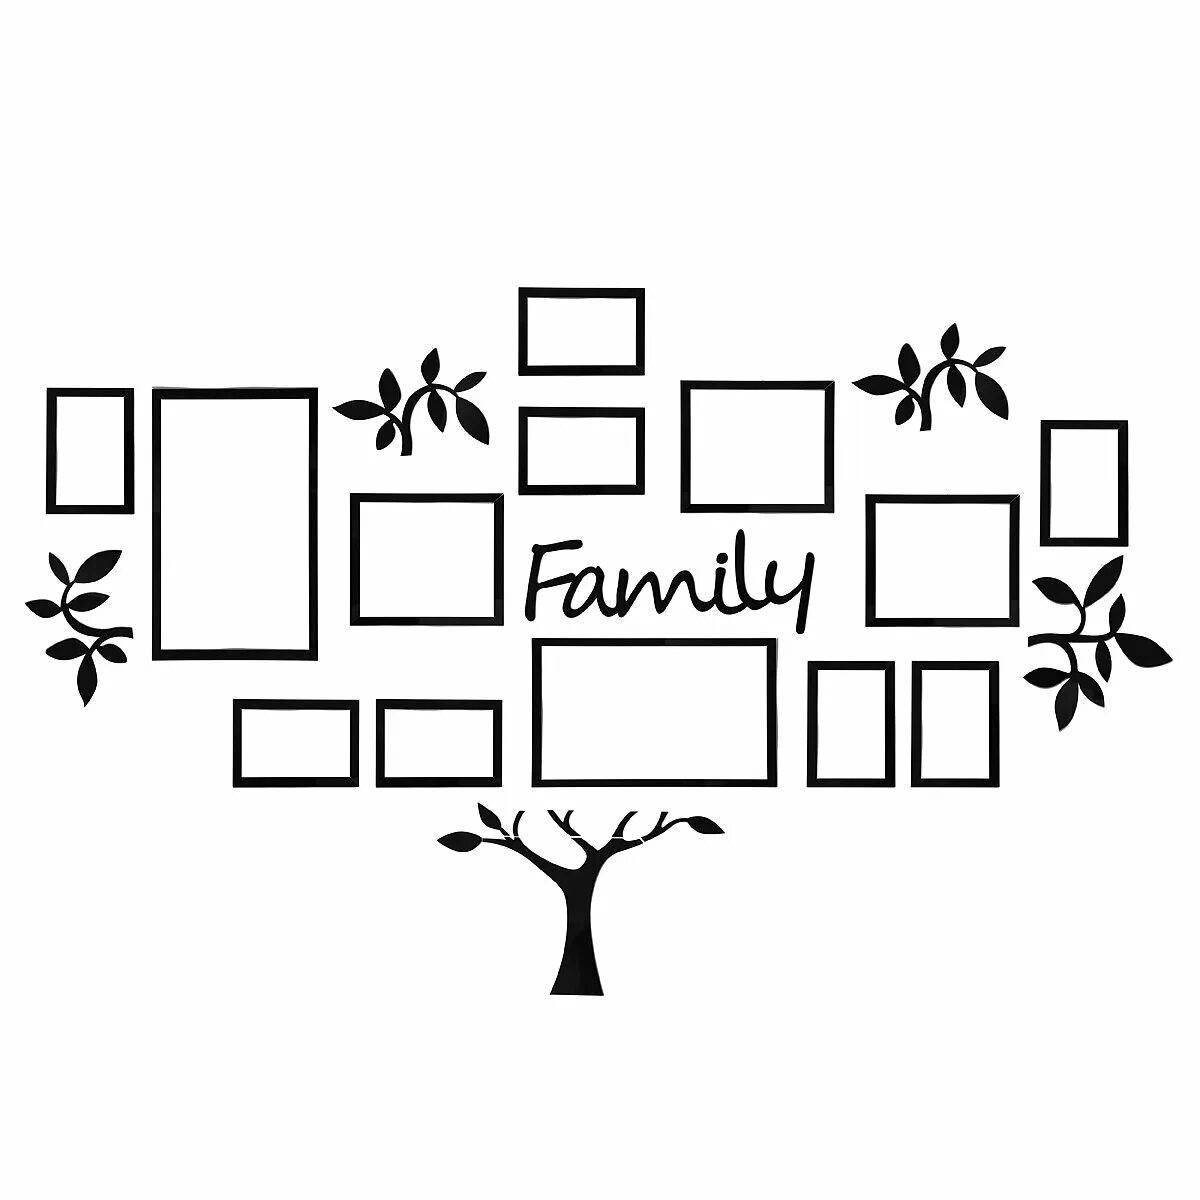 Шаблон majestic family tree для заполнения